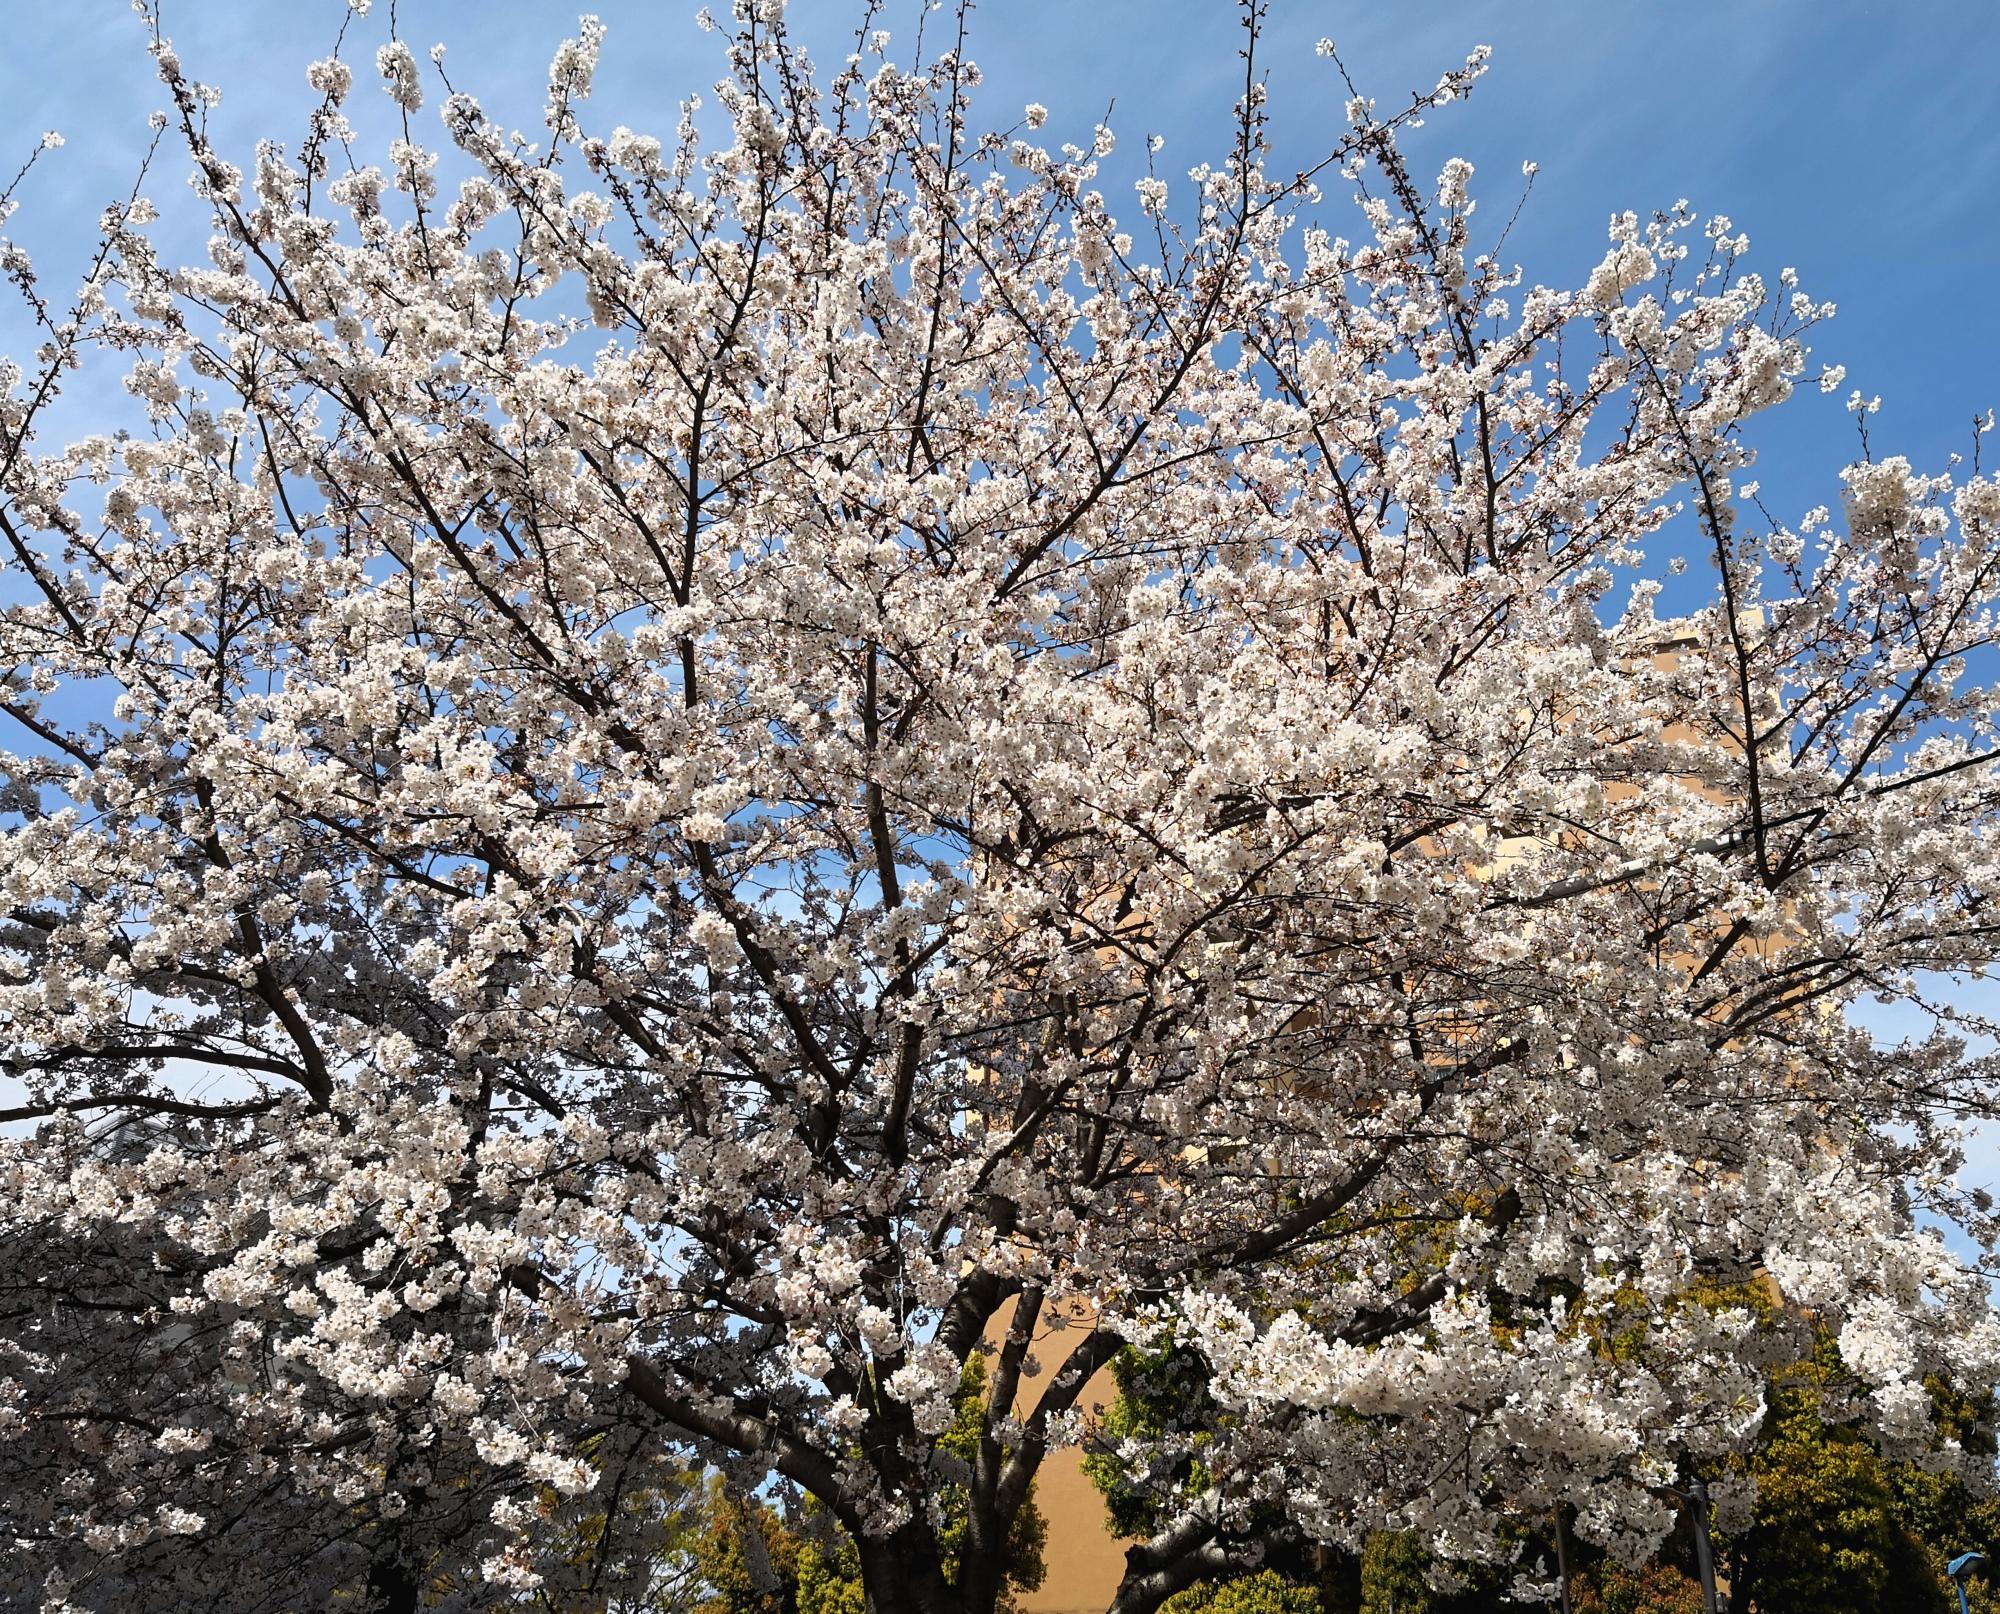 Tokyo (2019) - Cherry Blossoms